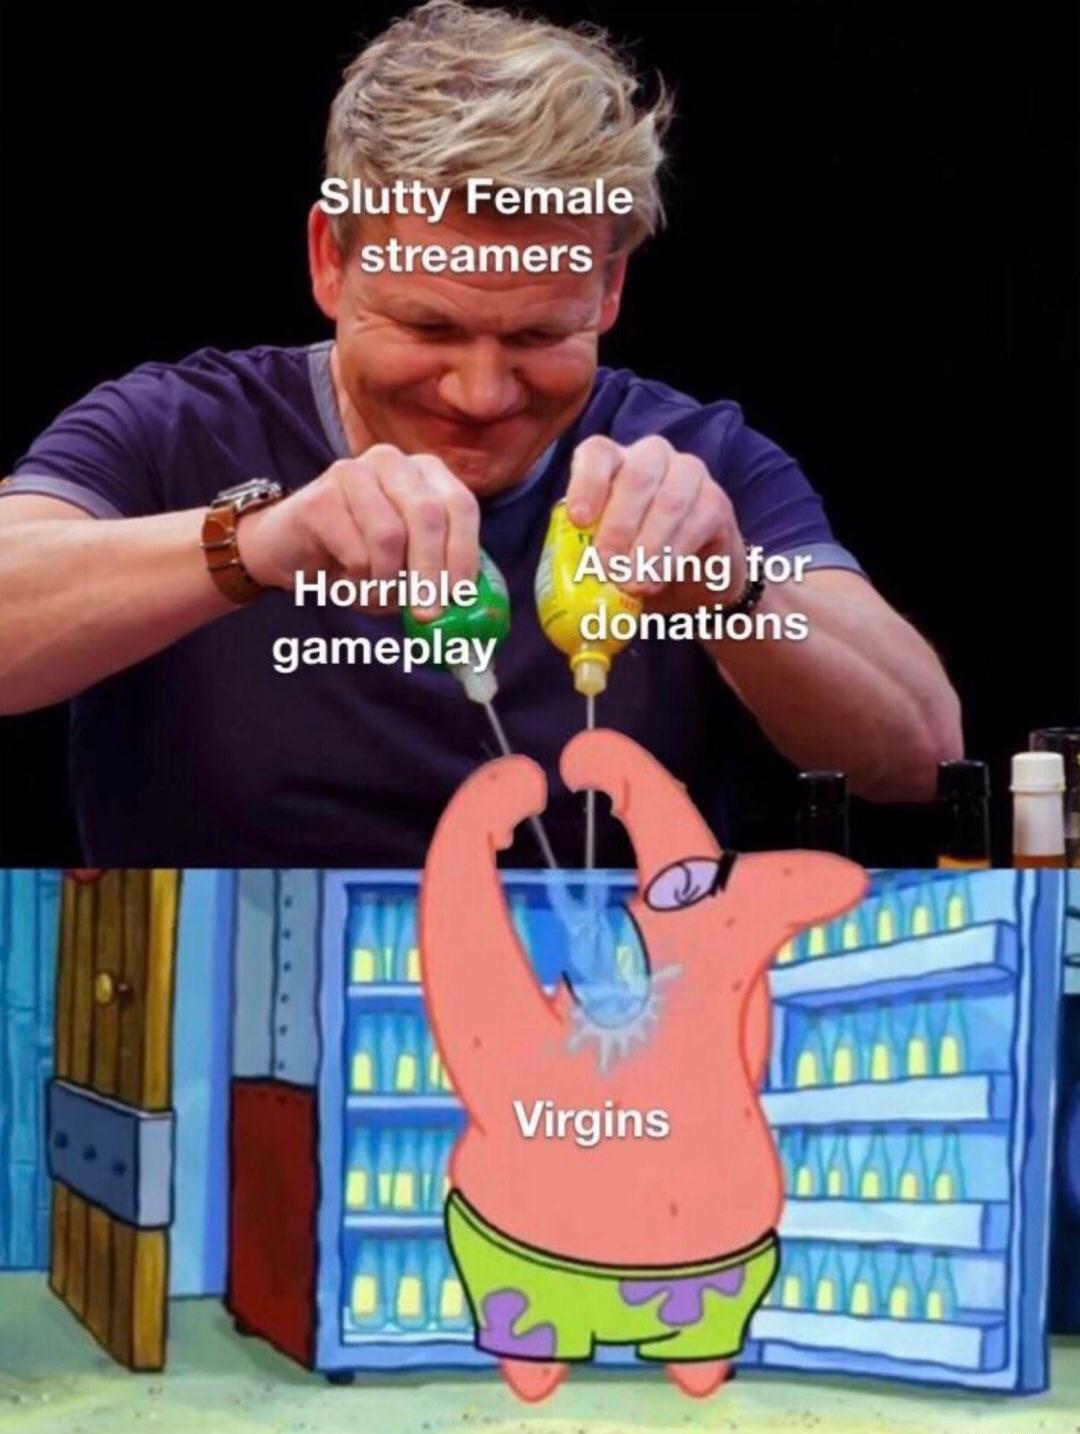 gaming-memes patrick meme - Slutty Female streamers Horrible gameplay Asking for donations Virgins